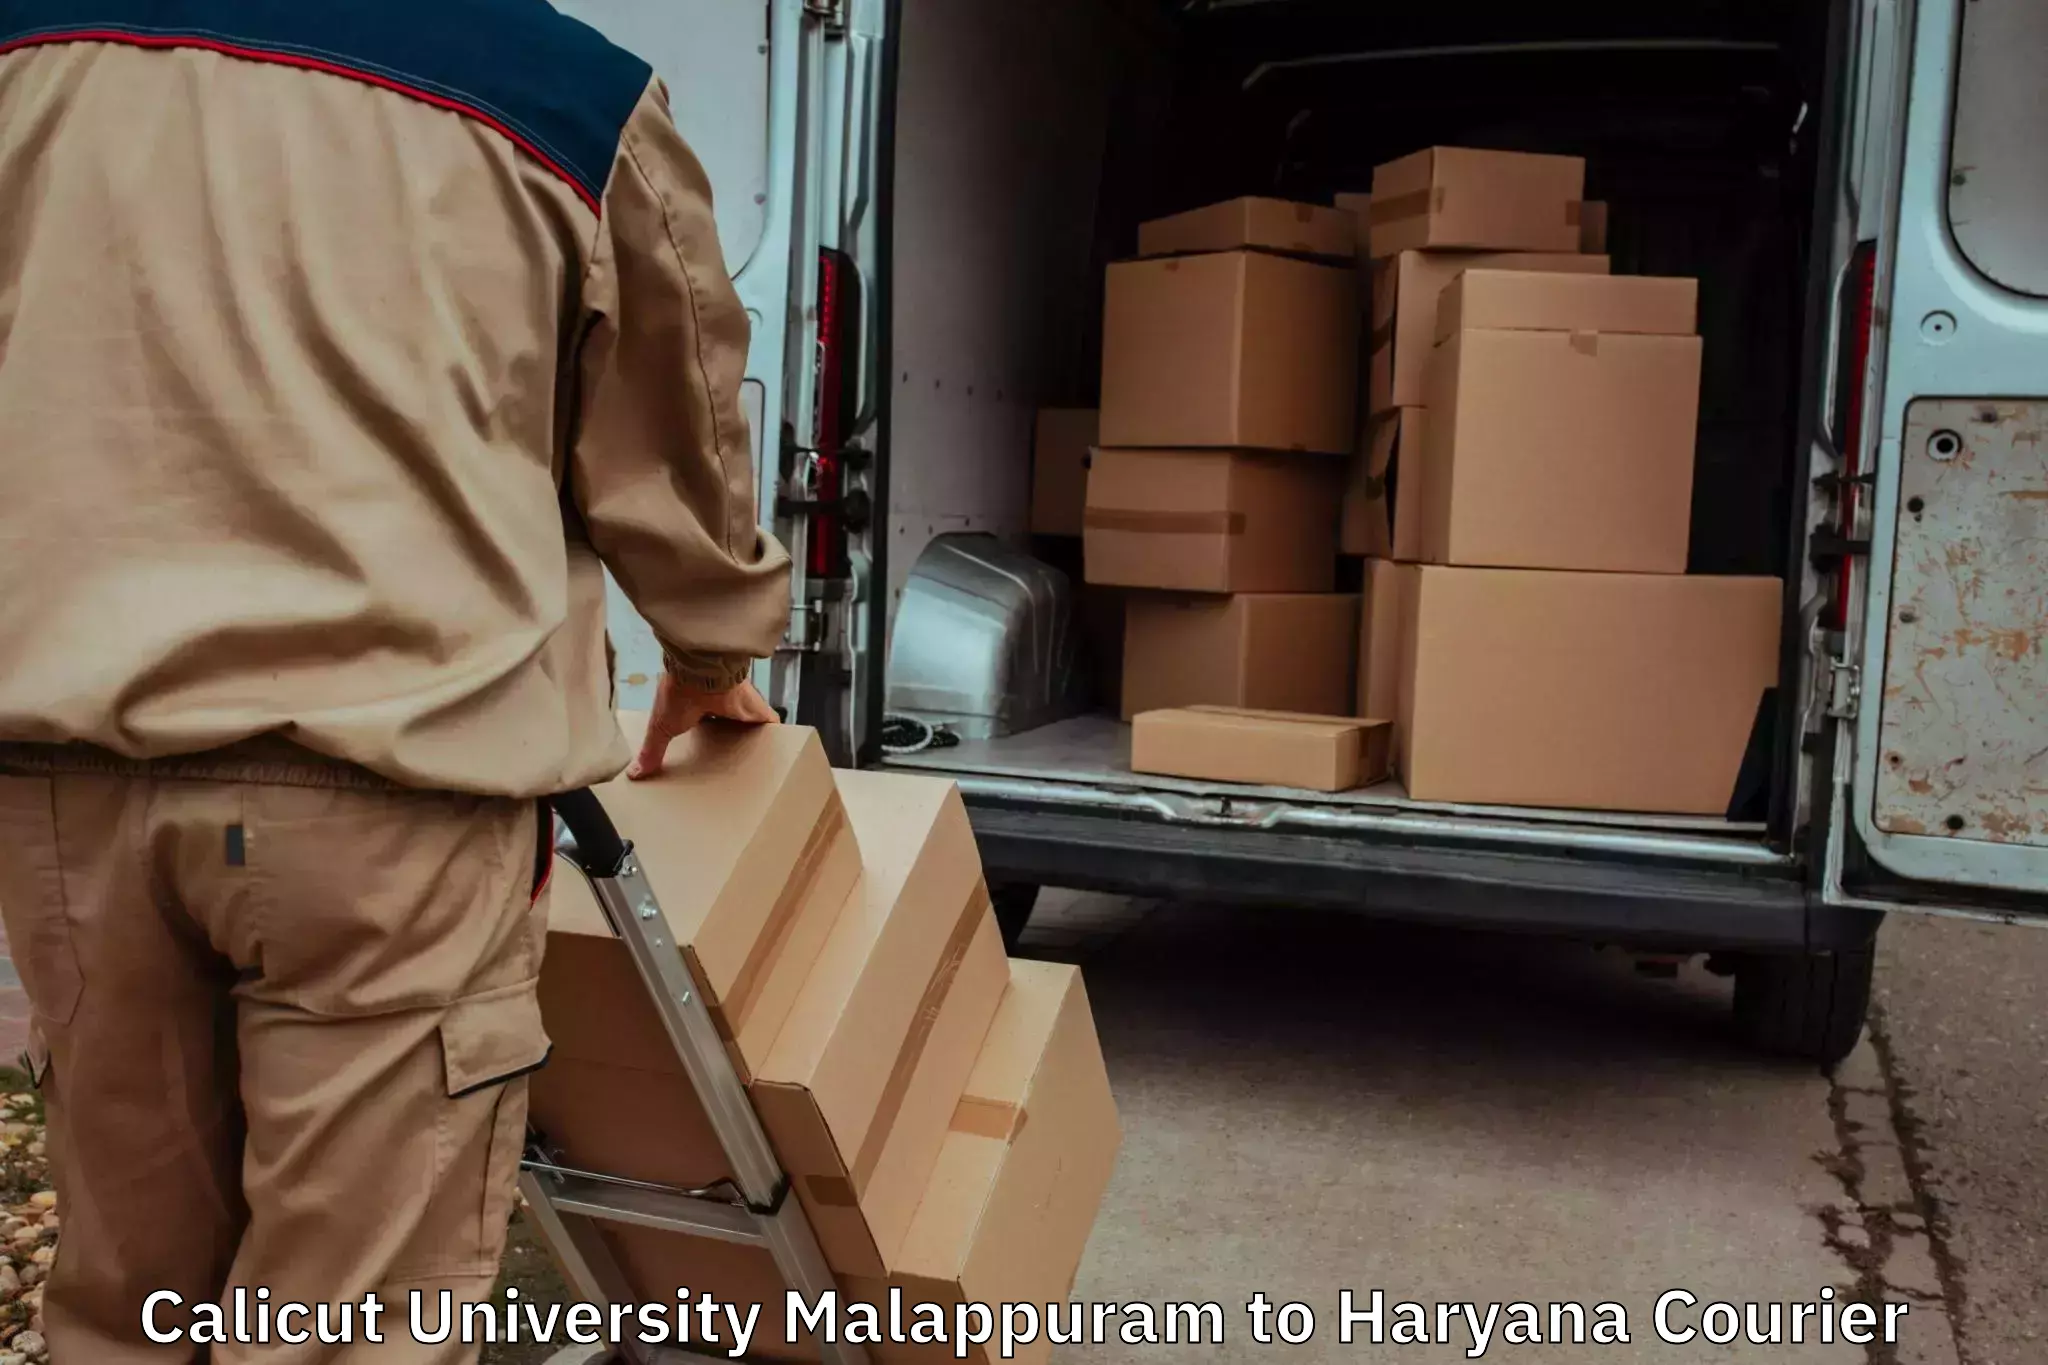 Household goods transport service Calicut University Malappuram to Panchkula